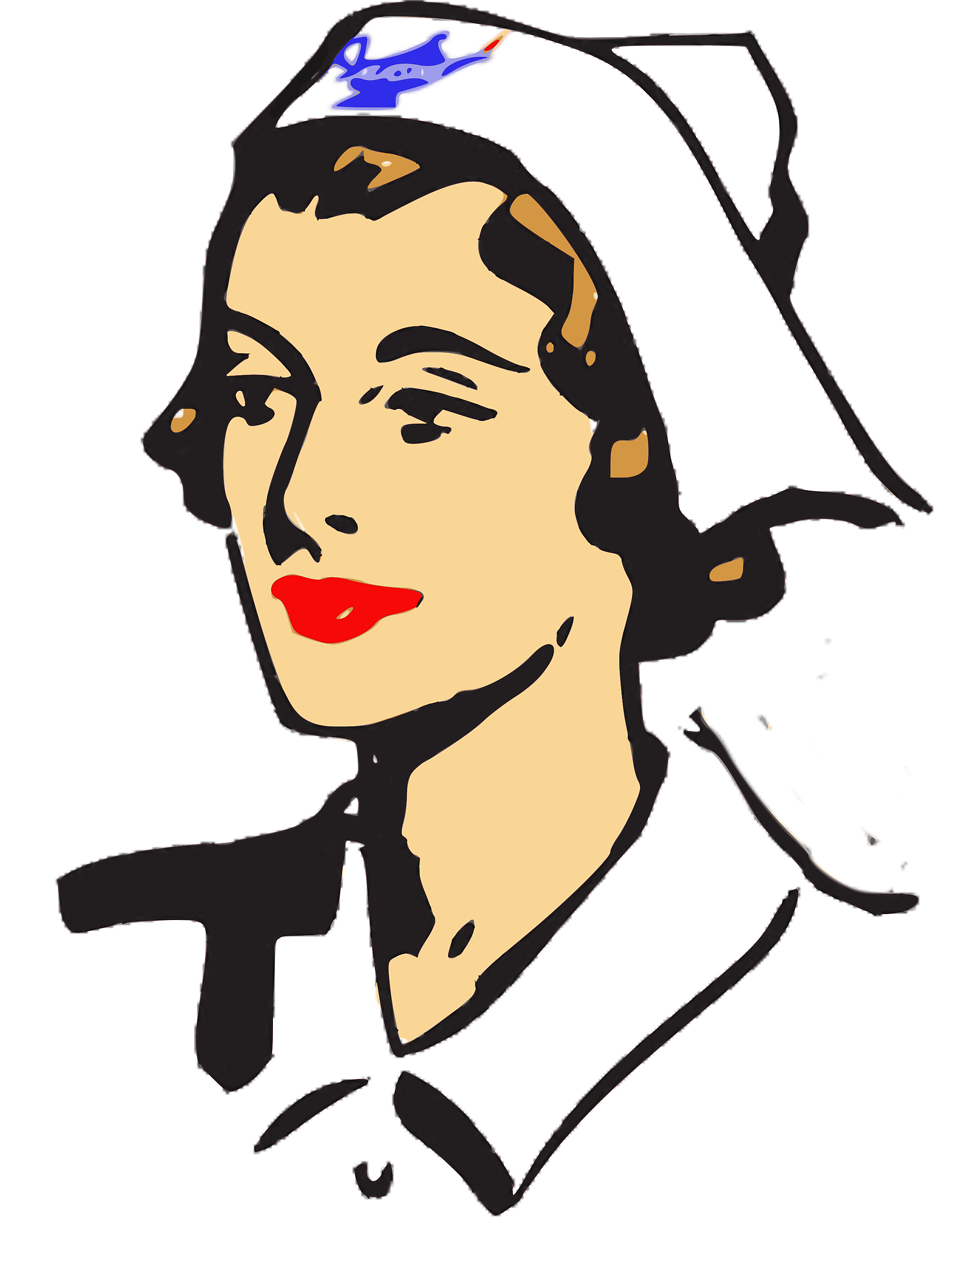 Nurse   Free Stock Photo   Illustration Of A Nurse     16251